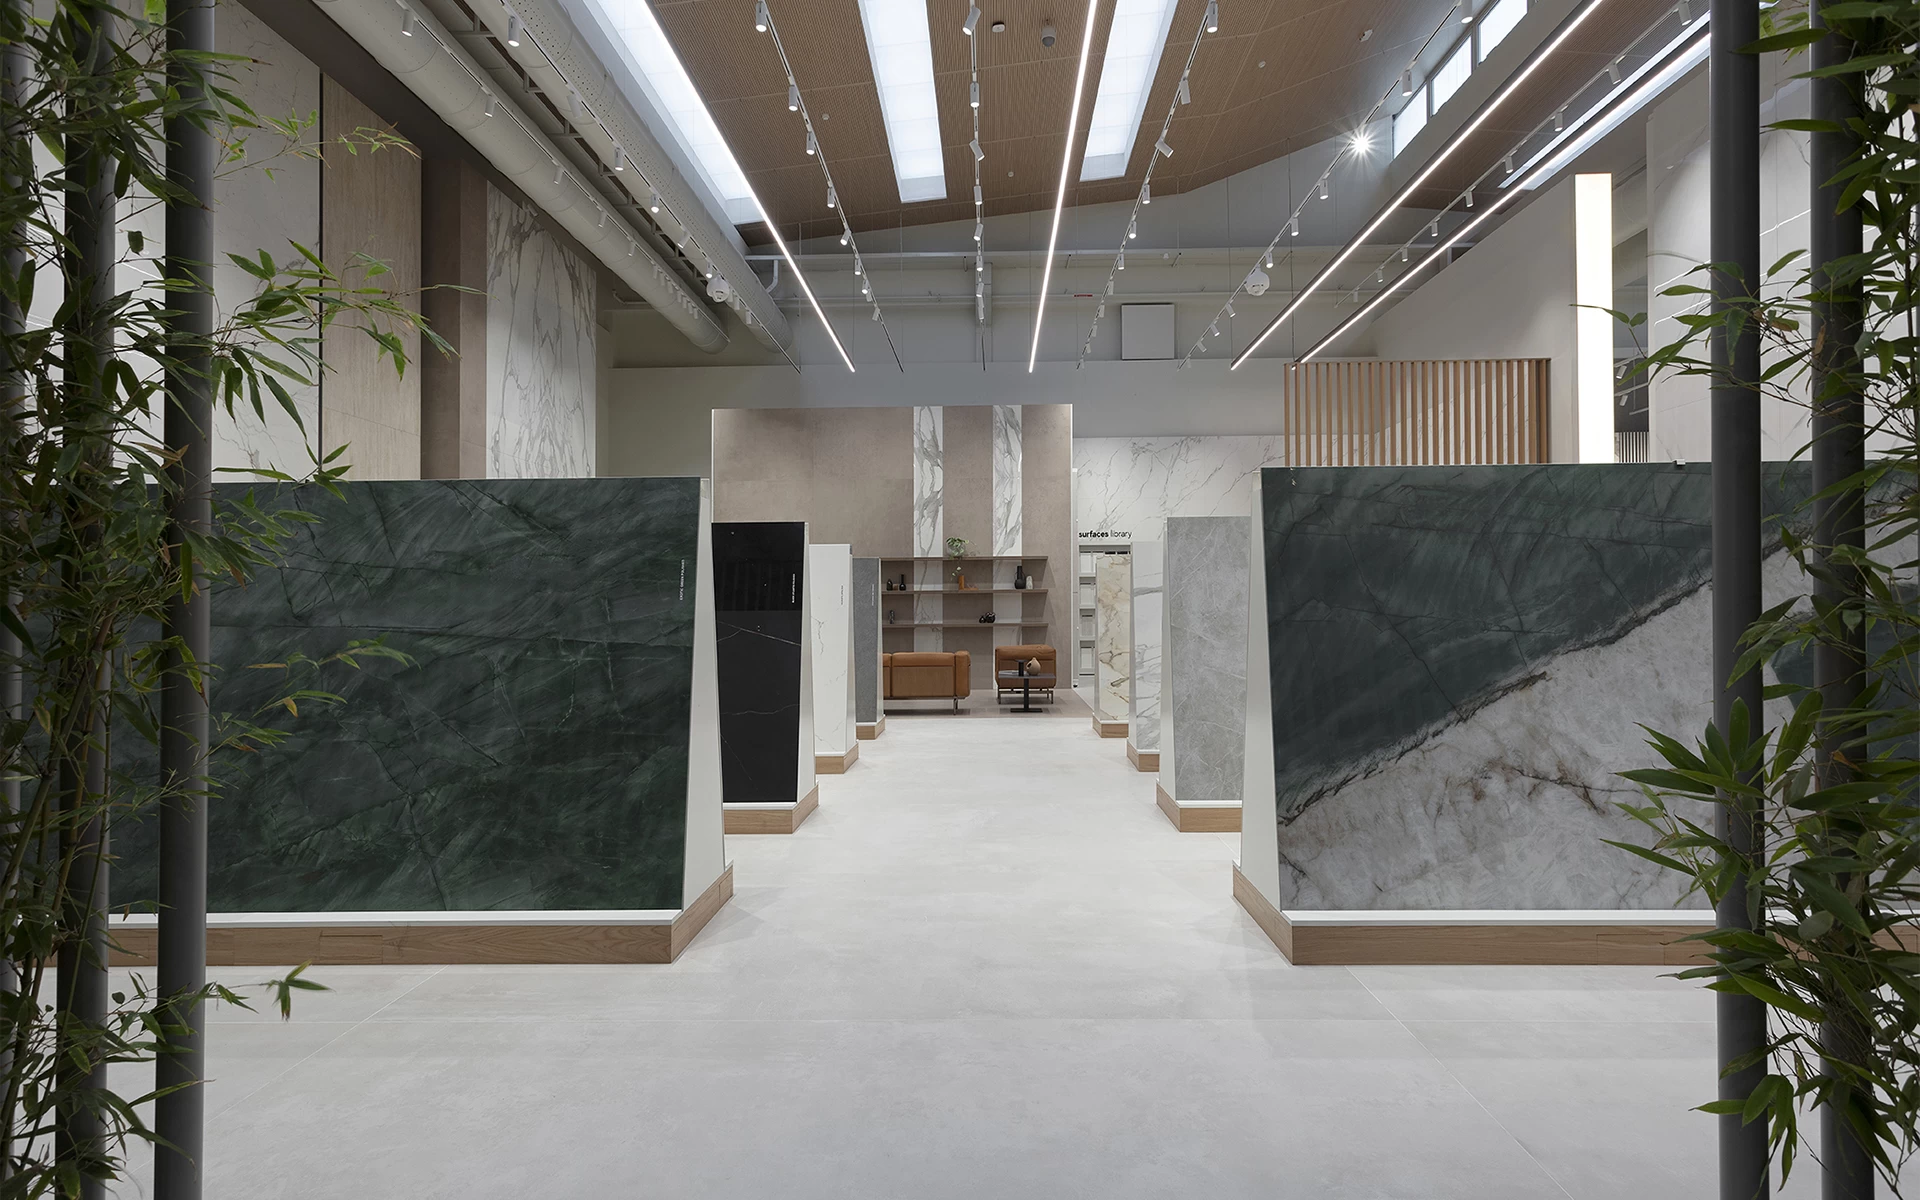 fiorano-modenese-atlas-plan-porcelain-stoneware-large-slabs-exhibition